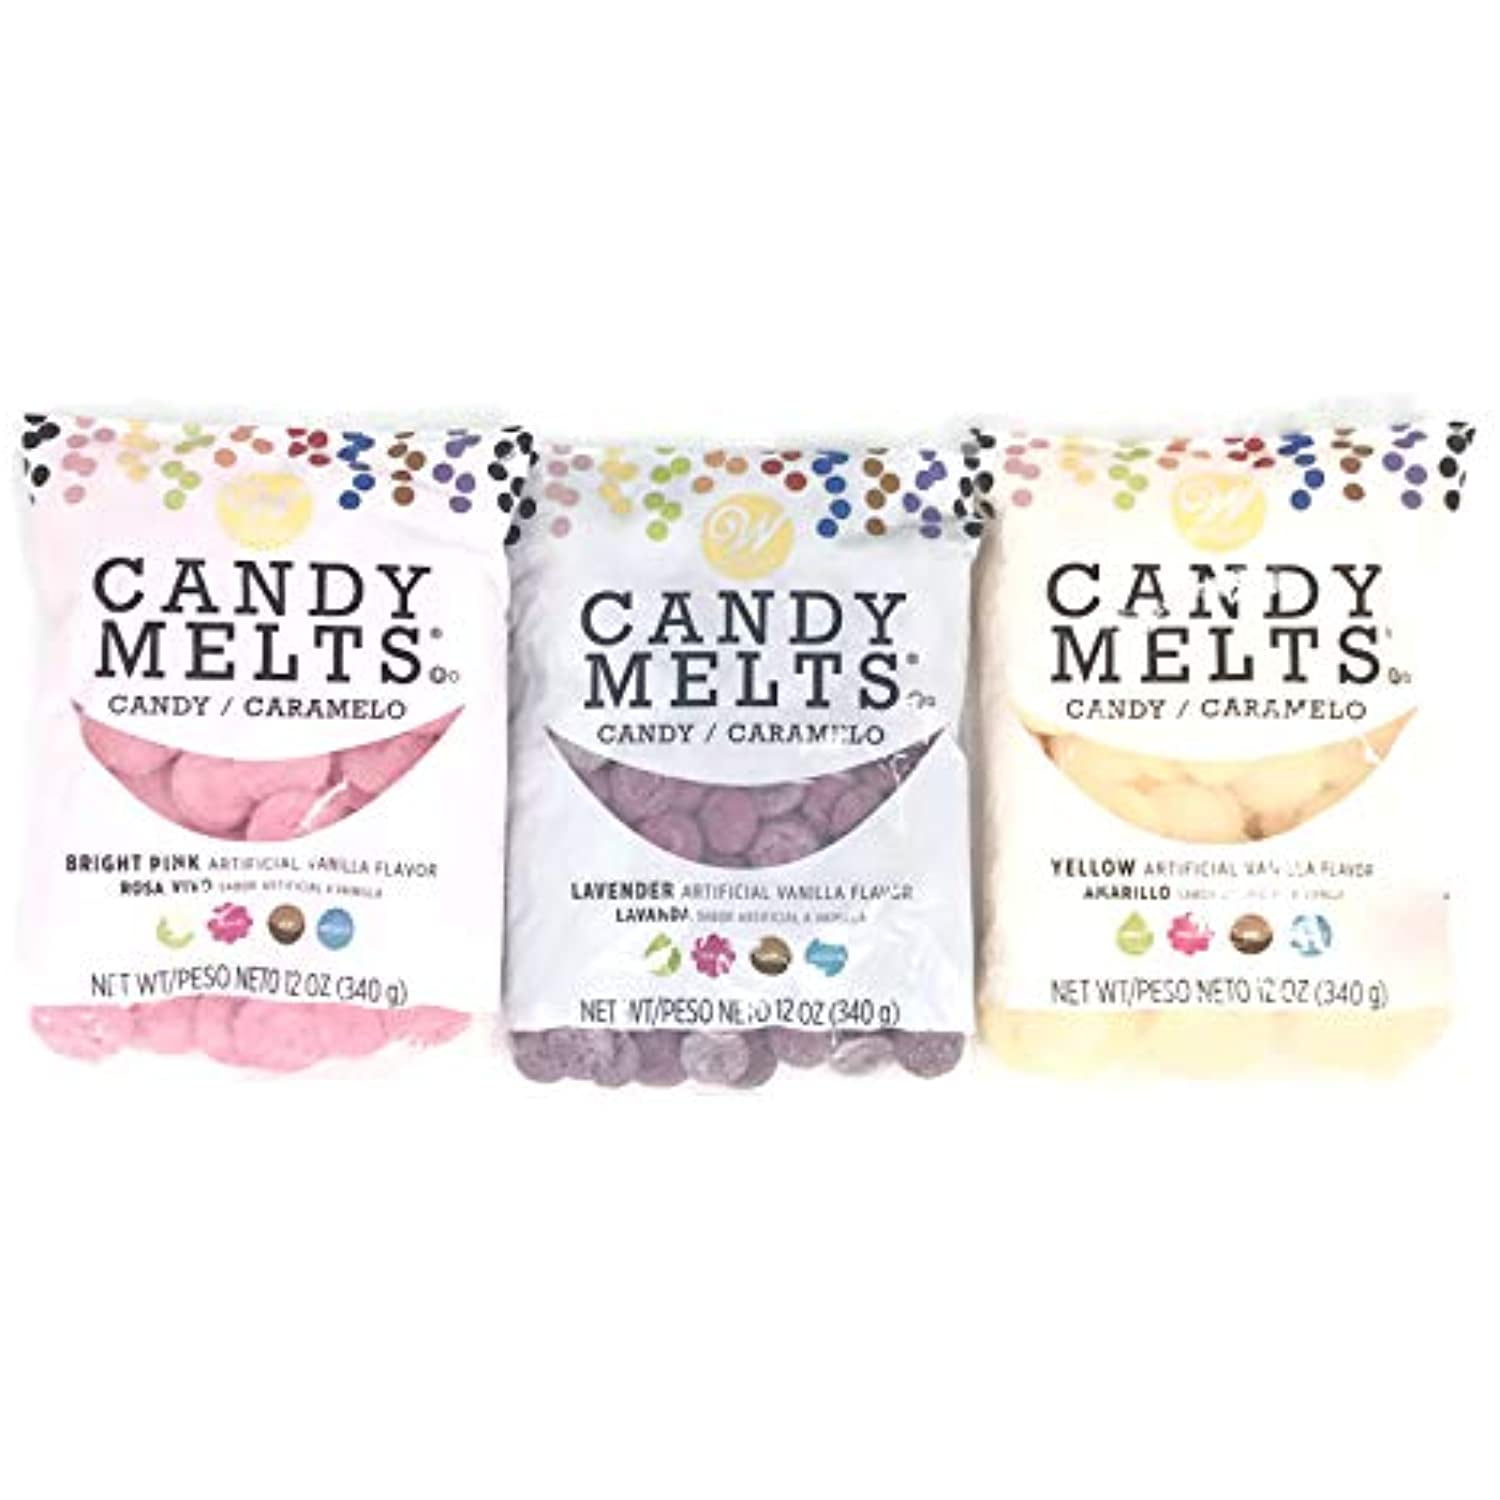 Candy Melts: Set of 3